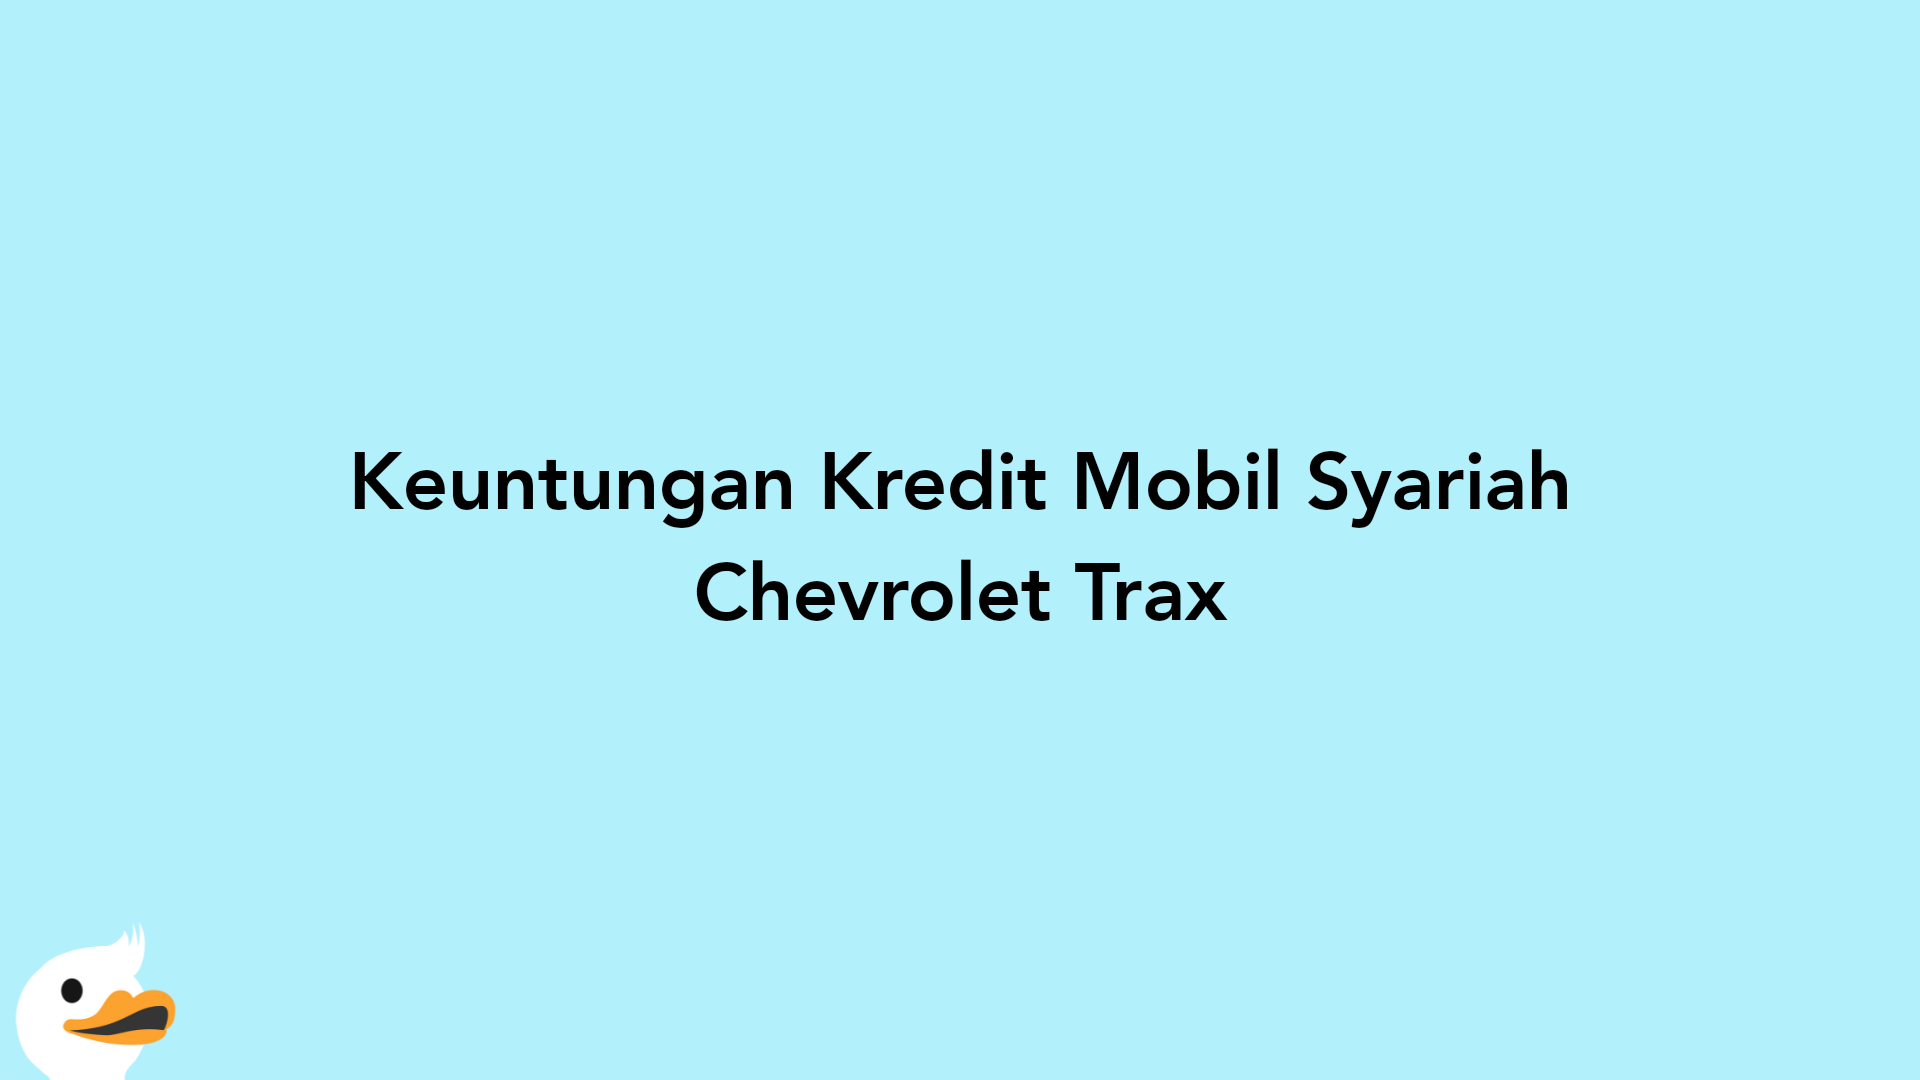 Keuntungan Kredit Mobil Syariah Chevrolet Trax